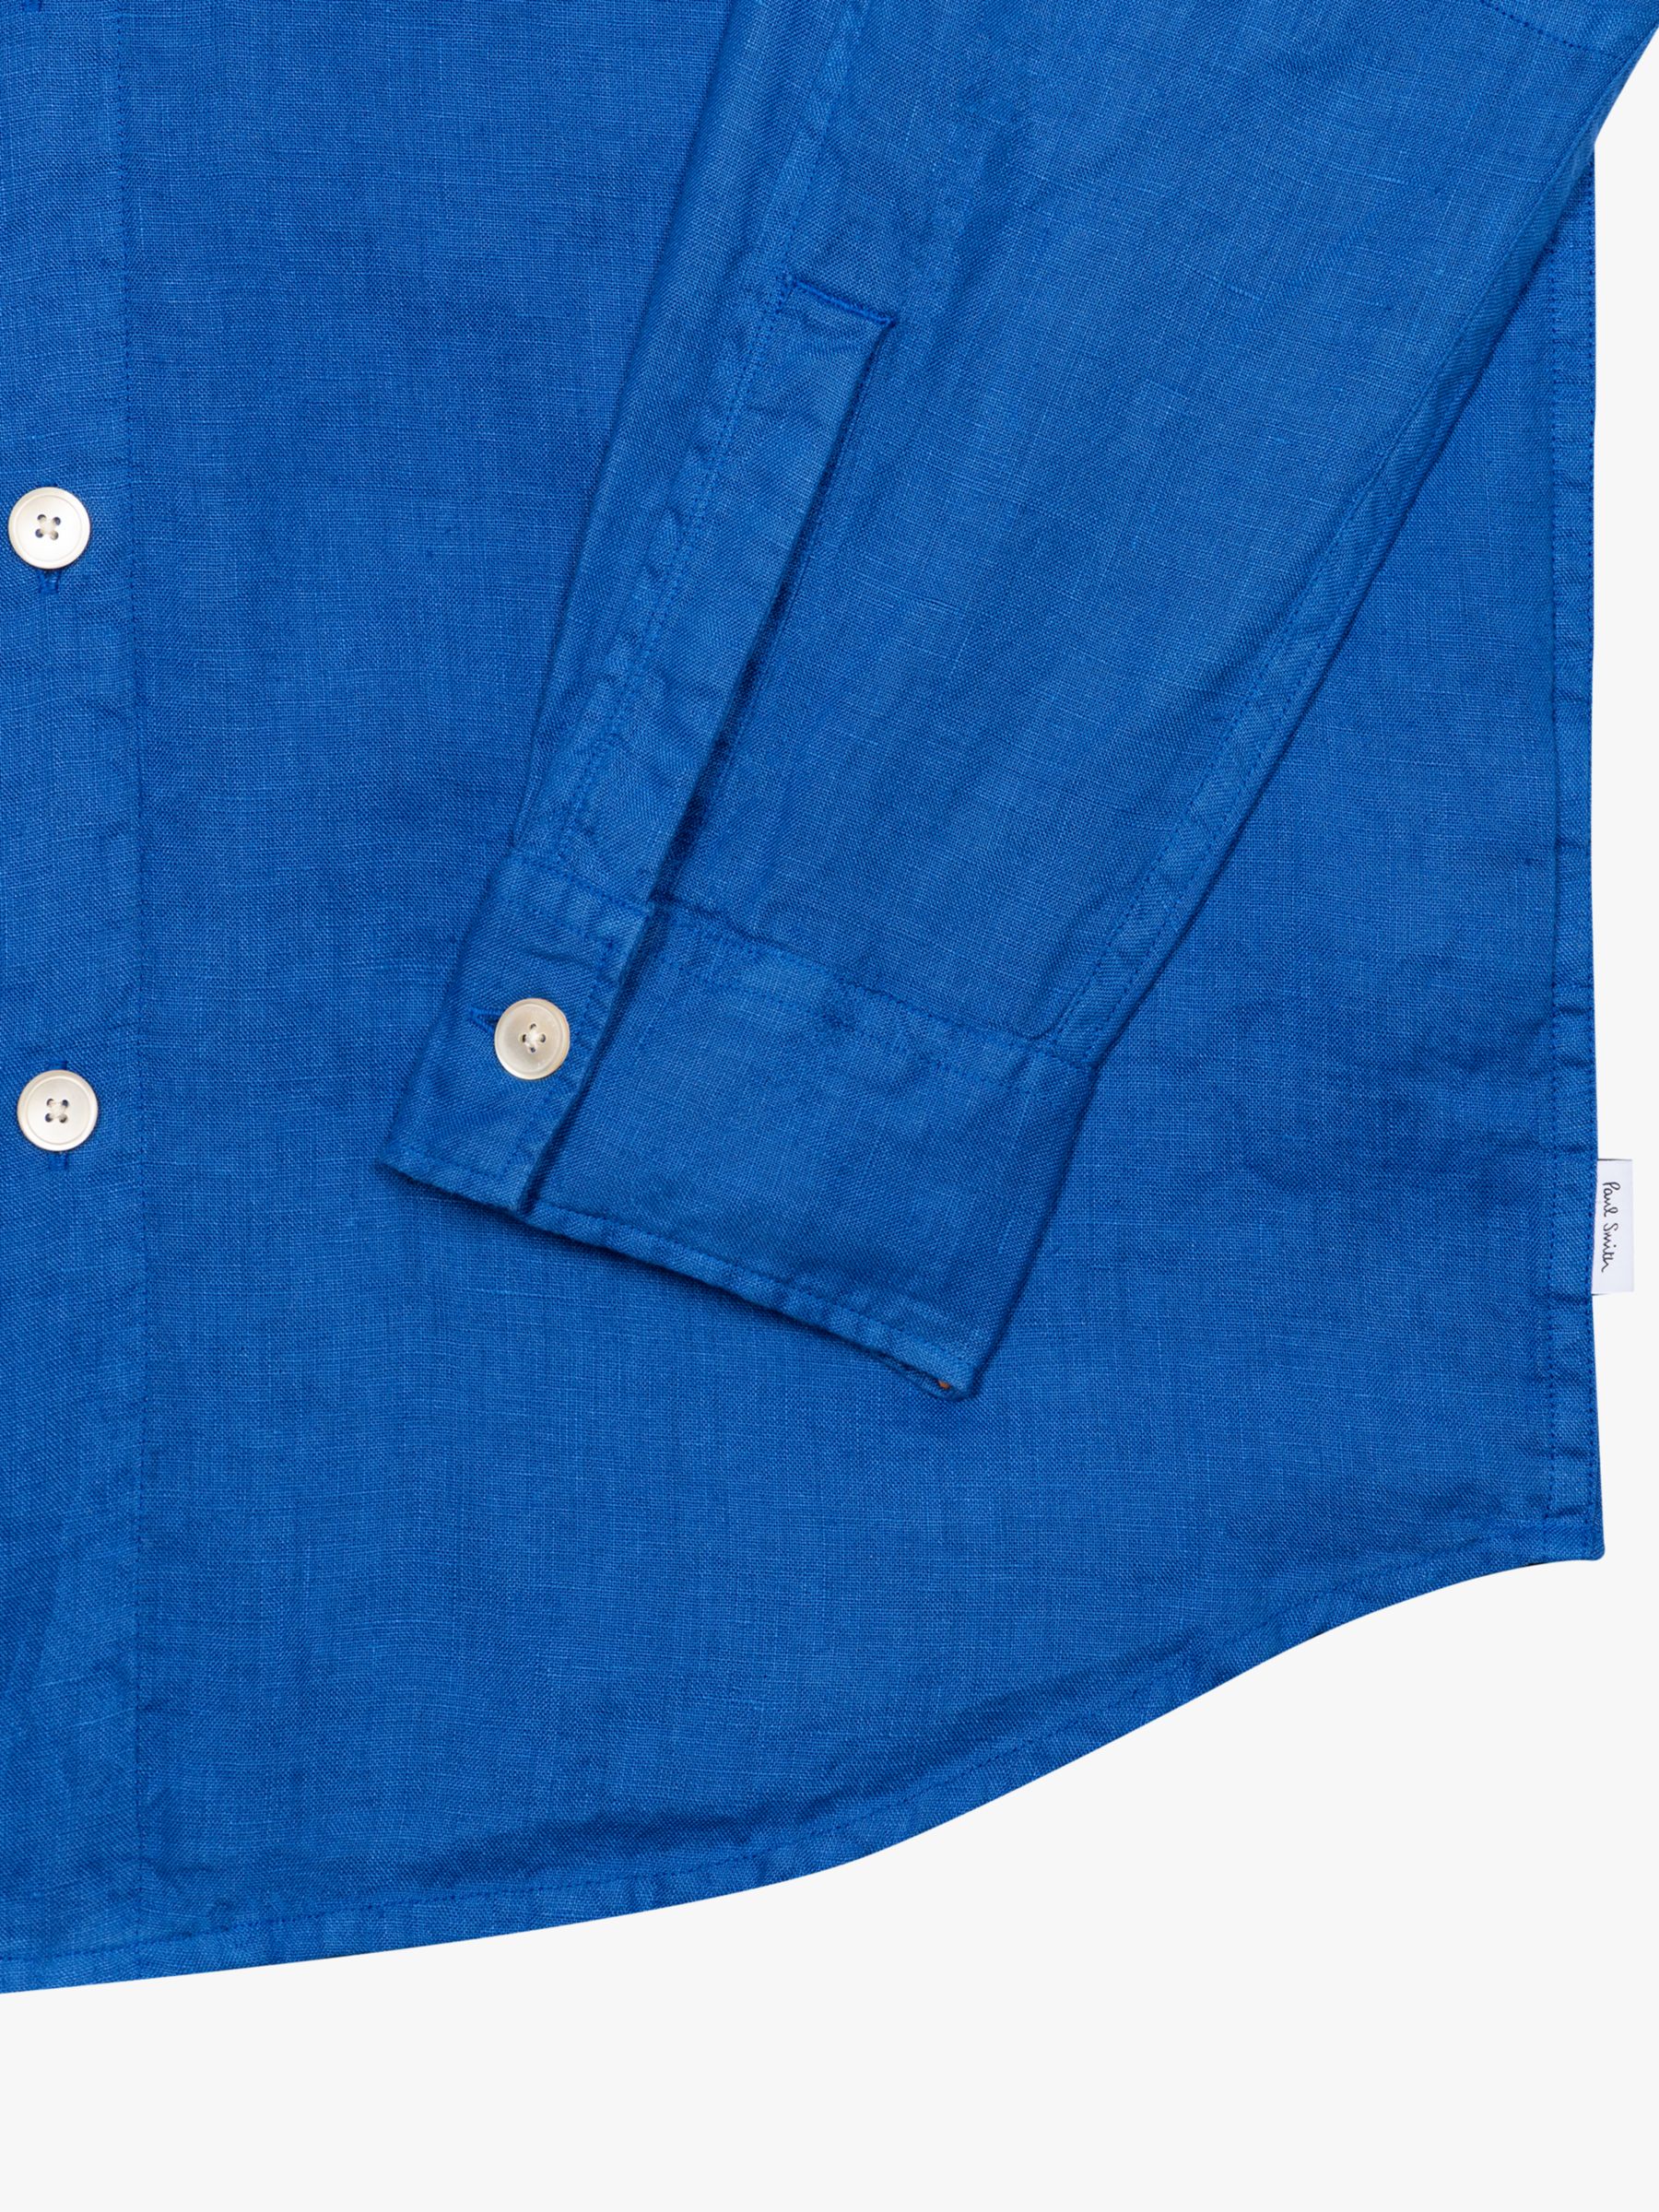 Paul Smith Long Sleeve Casual Fit Shirt, Blue, XL